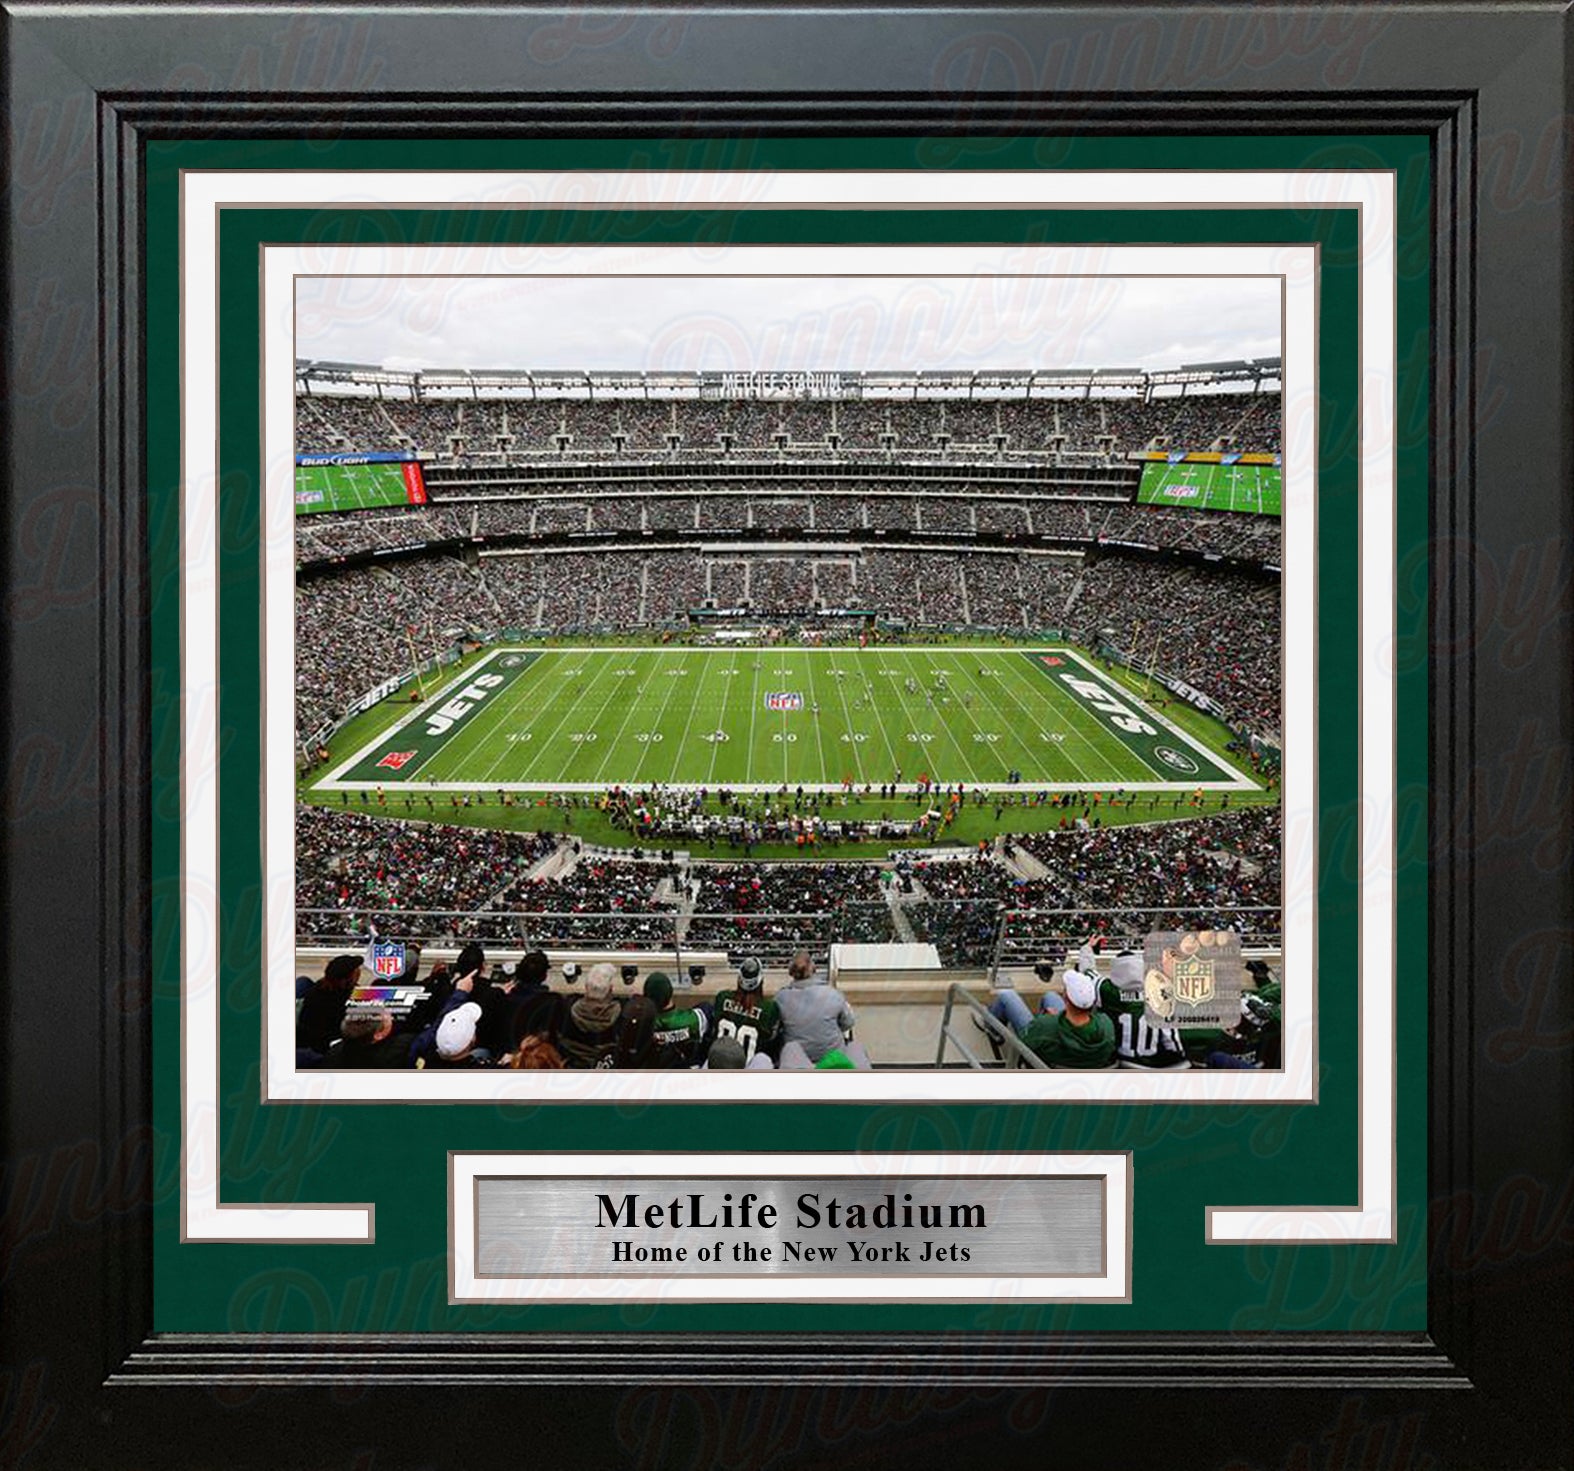 New York Jets MetLife Stadium 8" x 10" Framed Football Photo - Dynasty Sports & Framing 